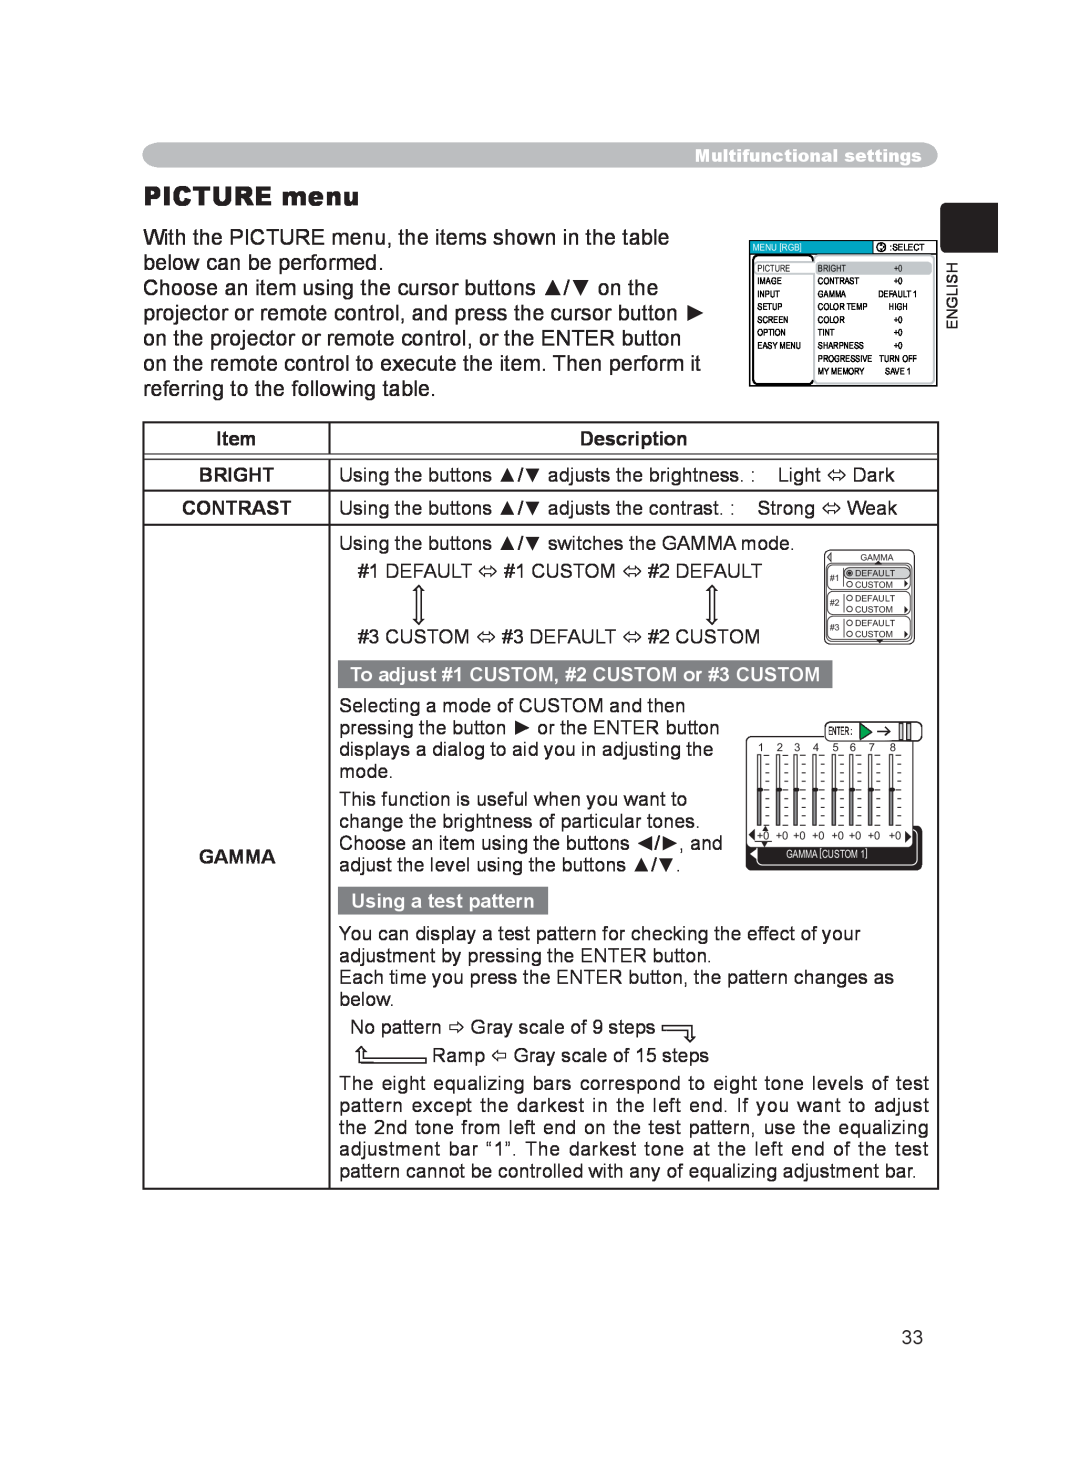 Hitachi PJ-LC9 user manual PICTURE menu, To adjust #1 CUSTOM, #2 CUSTOM or #3 CUSTOM, Using a test pattern 